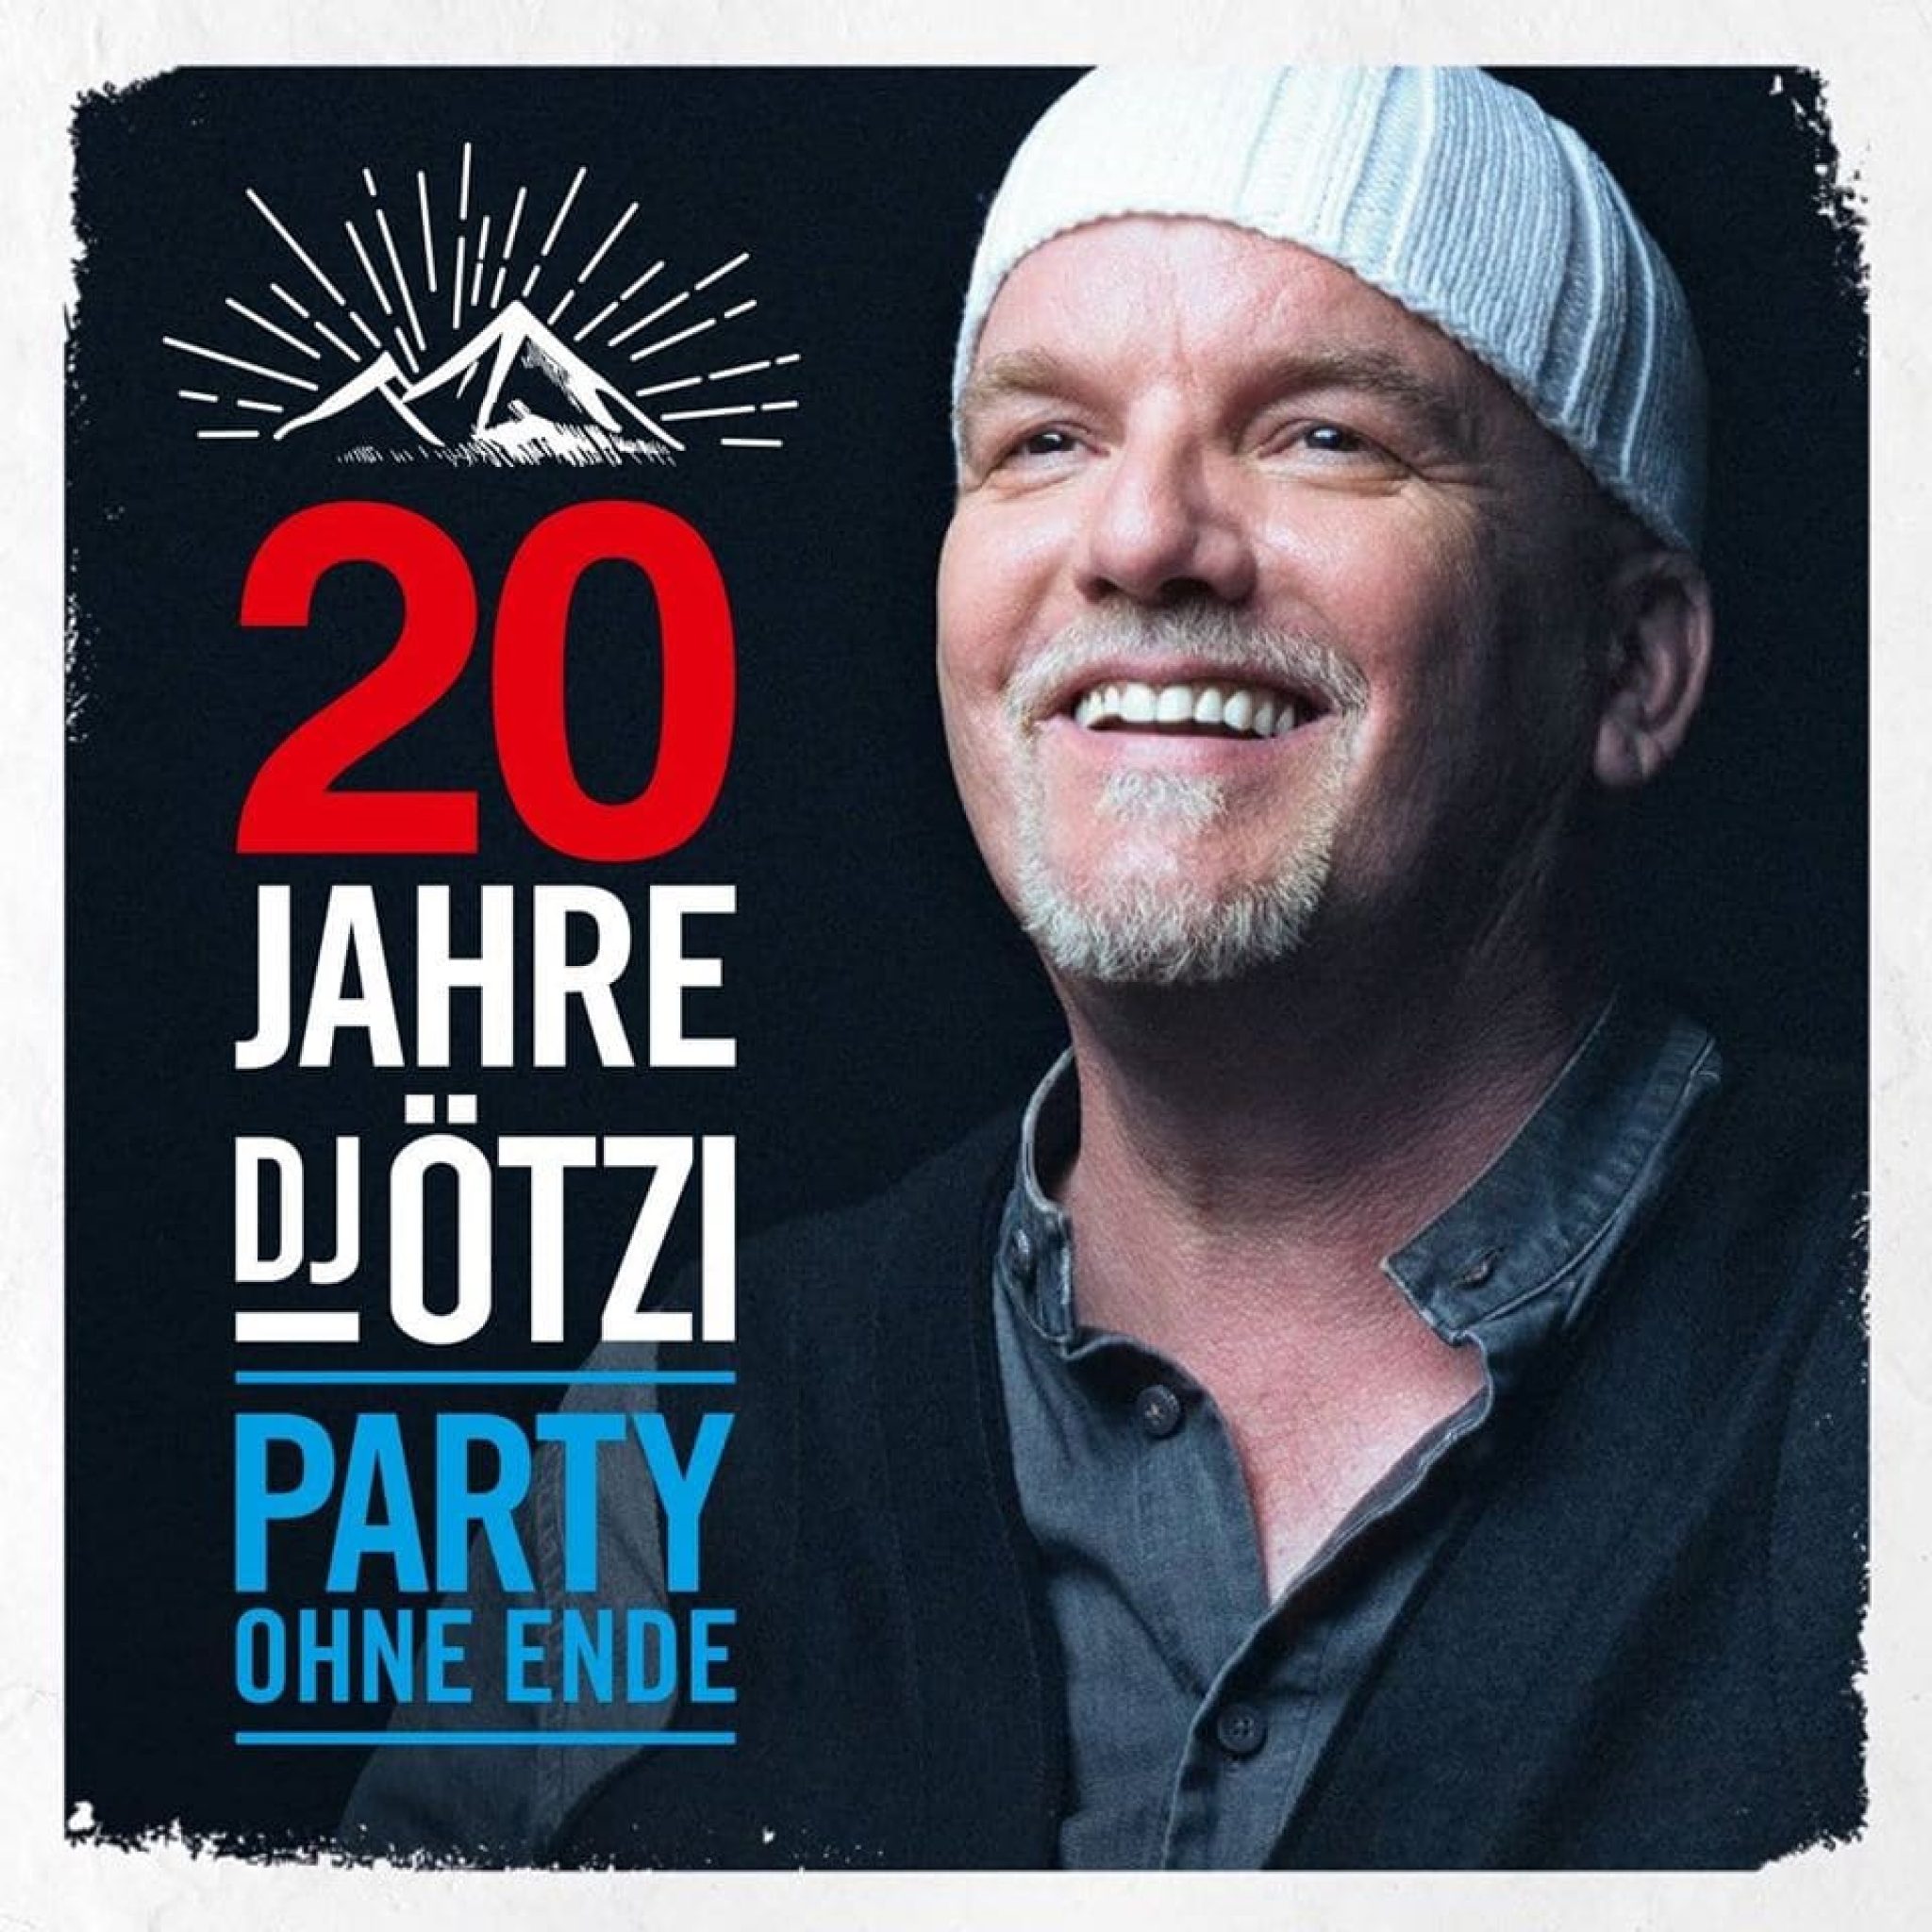 DJ Ötzi Gipfeltour 2020 in Hintertux